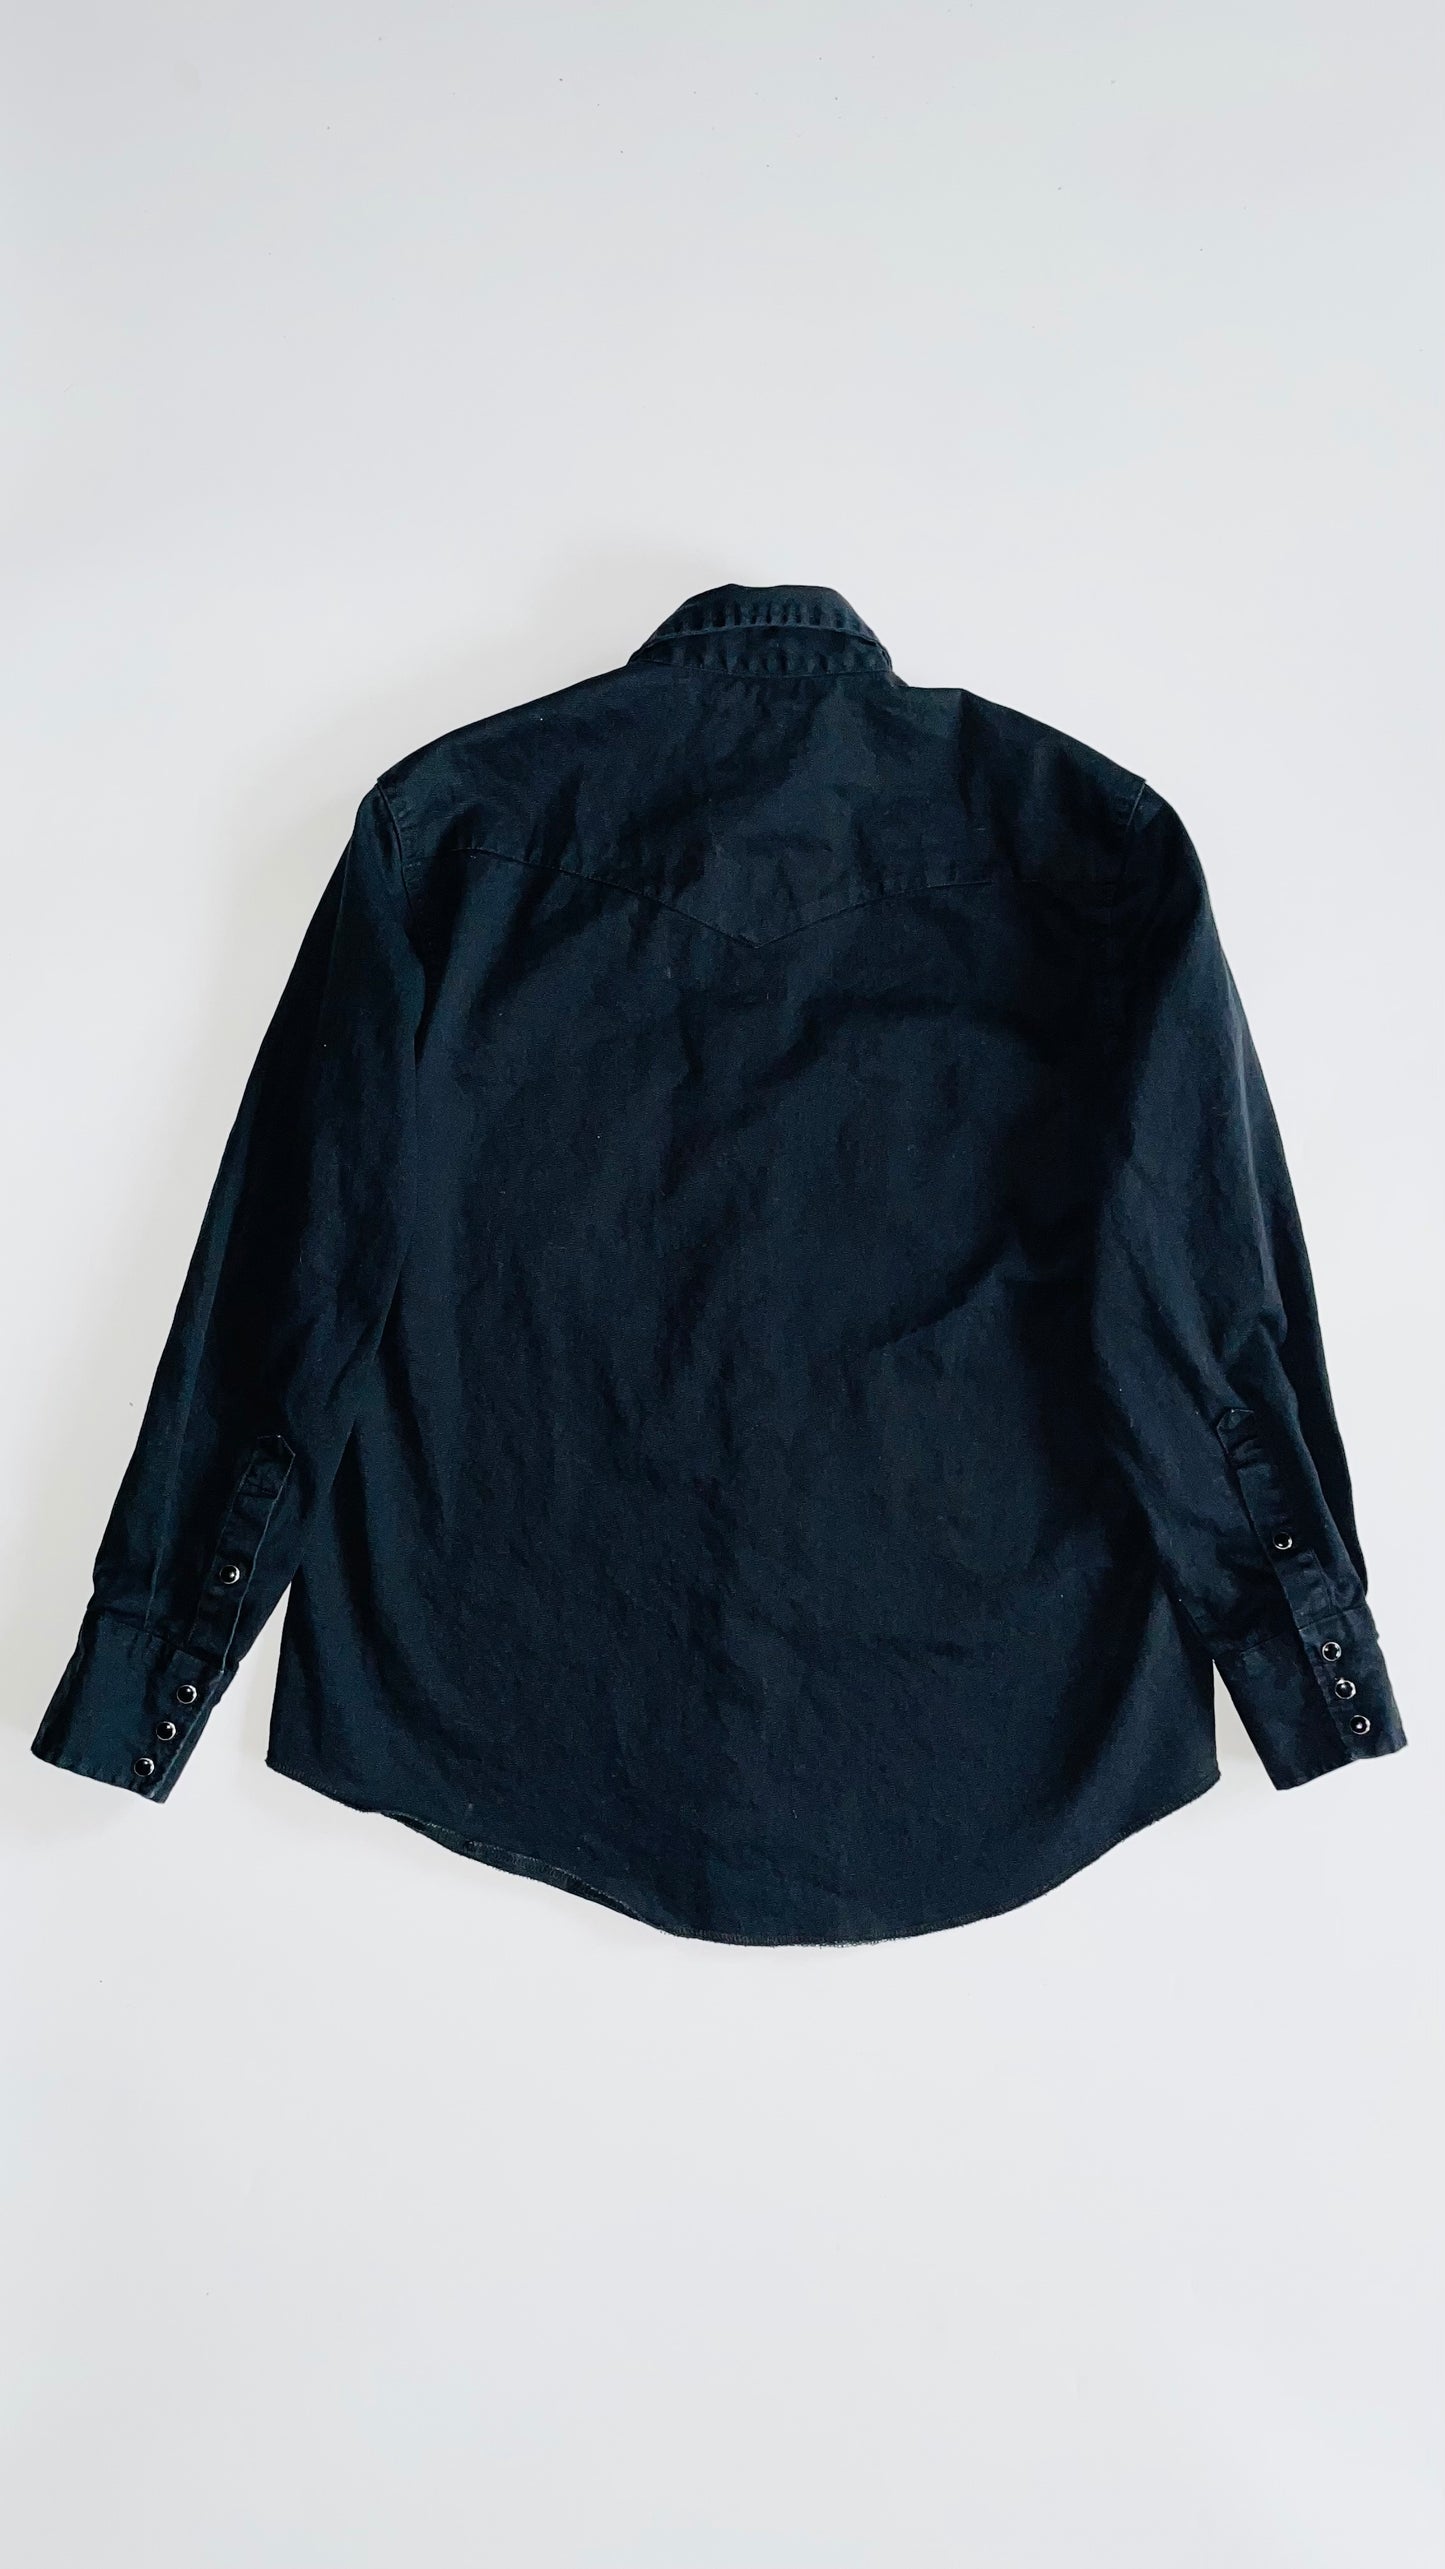 Vintage 90s Wrangler black button up western shirt - Size L